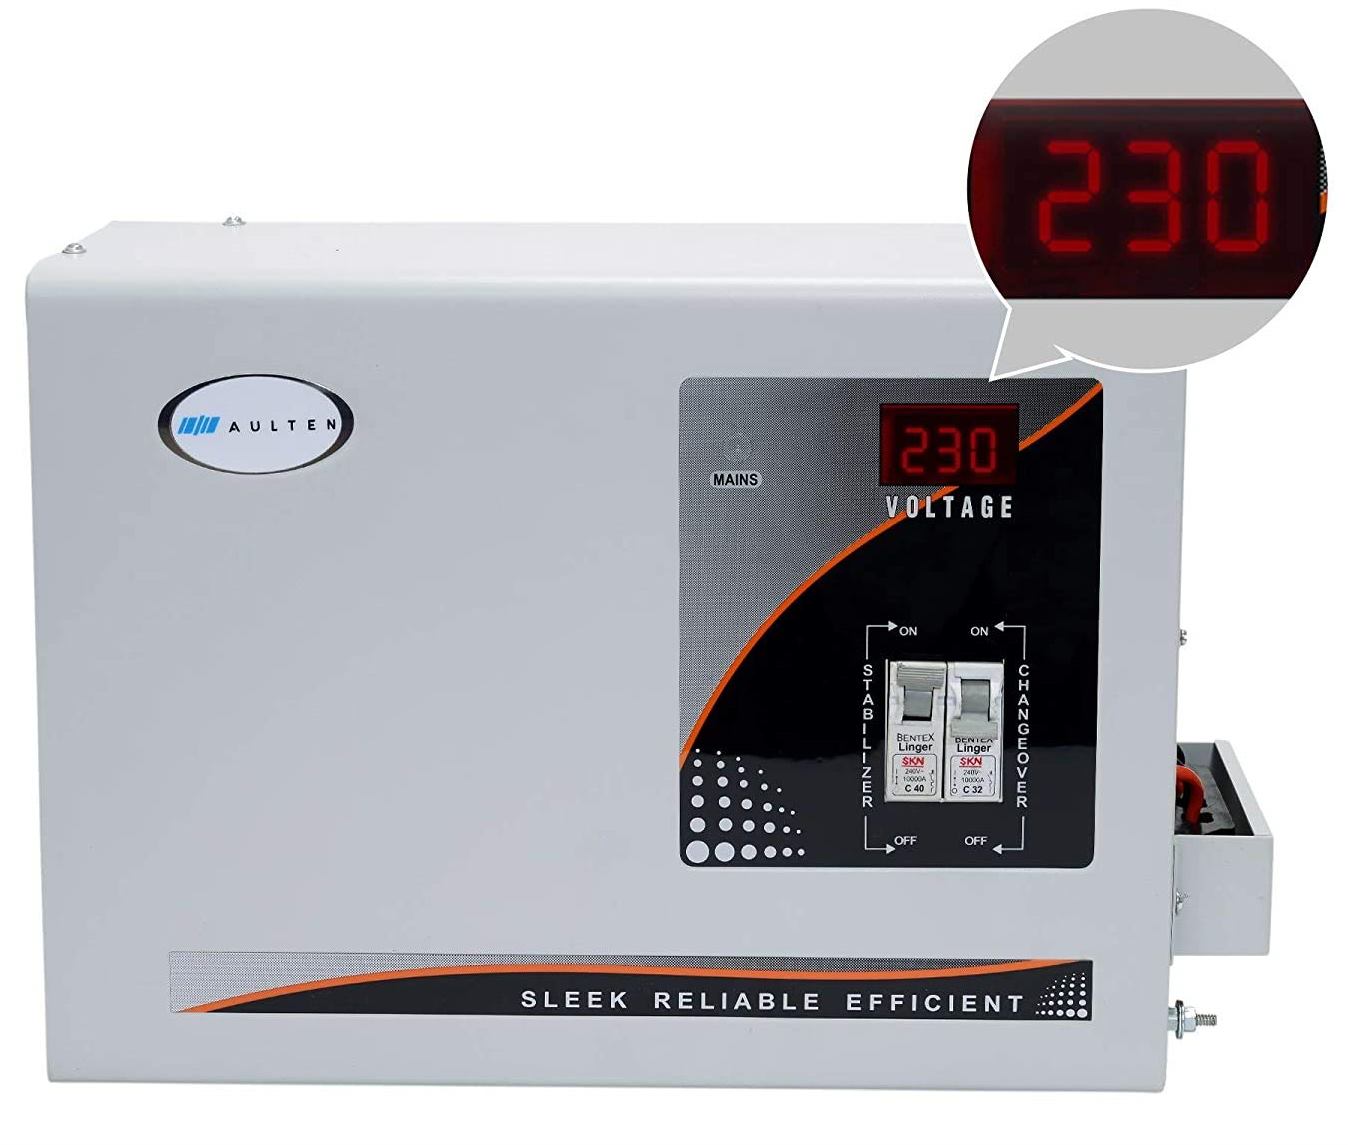 AULTEN Copper Mainline Voltage Stabilizer for Home